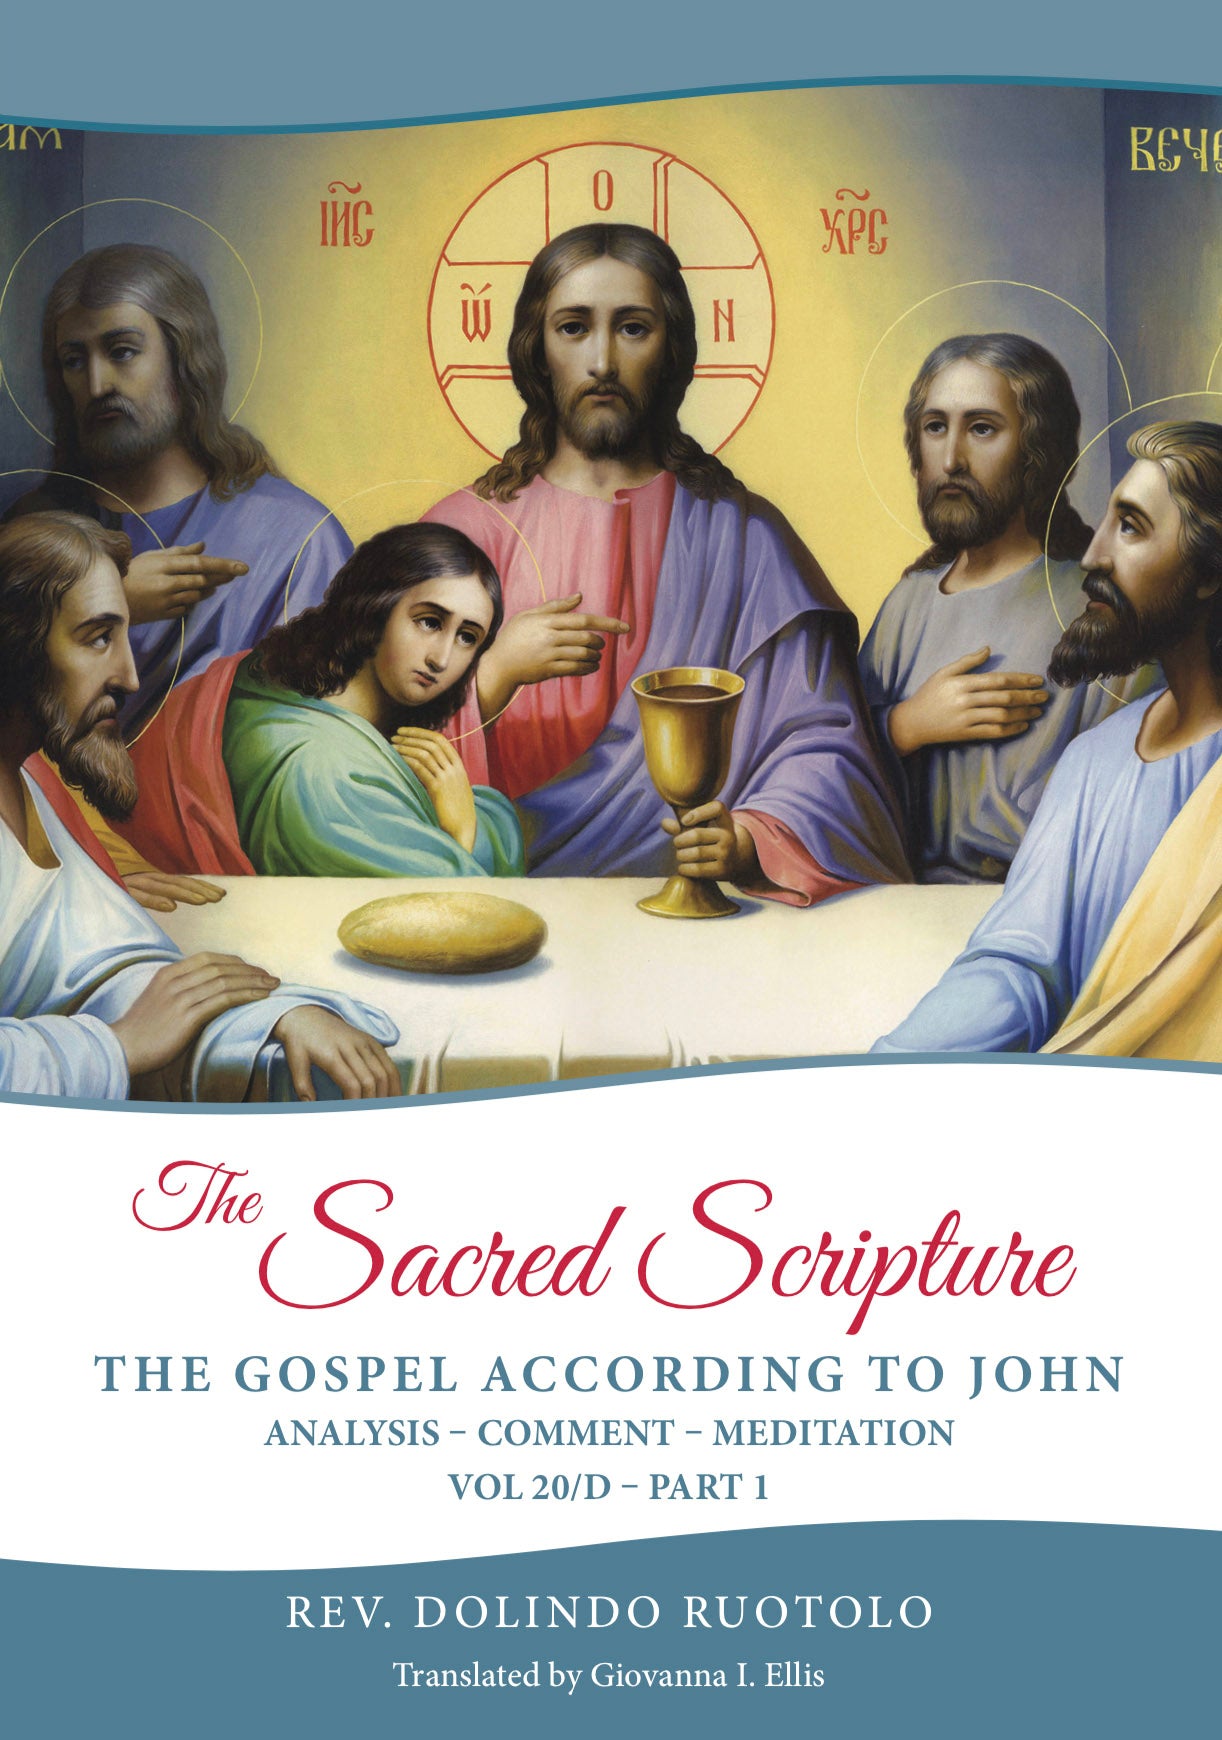 The Sacred Scripture: The Gospel According to John (Don Dolindo Ruotolo) Book 1